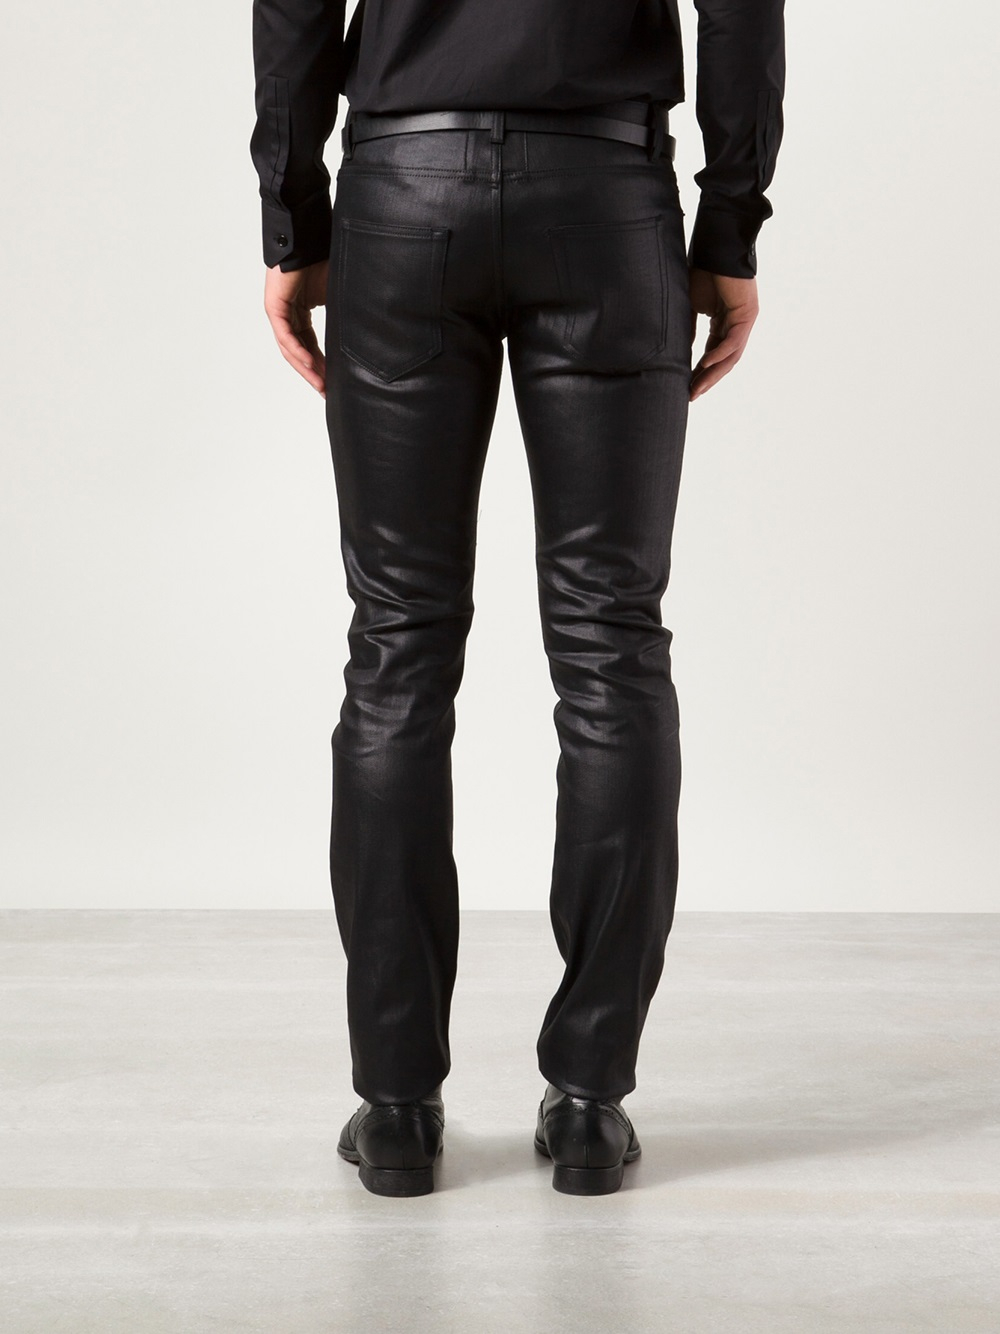 Lyst - Saint Laurent Wax Denim Jeans in Black for Men